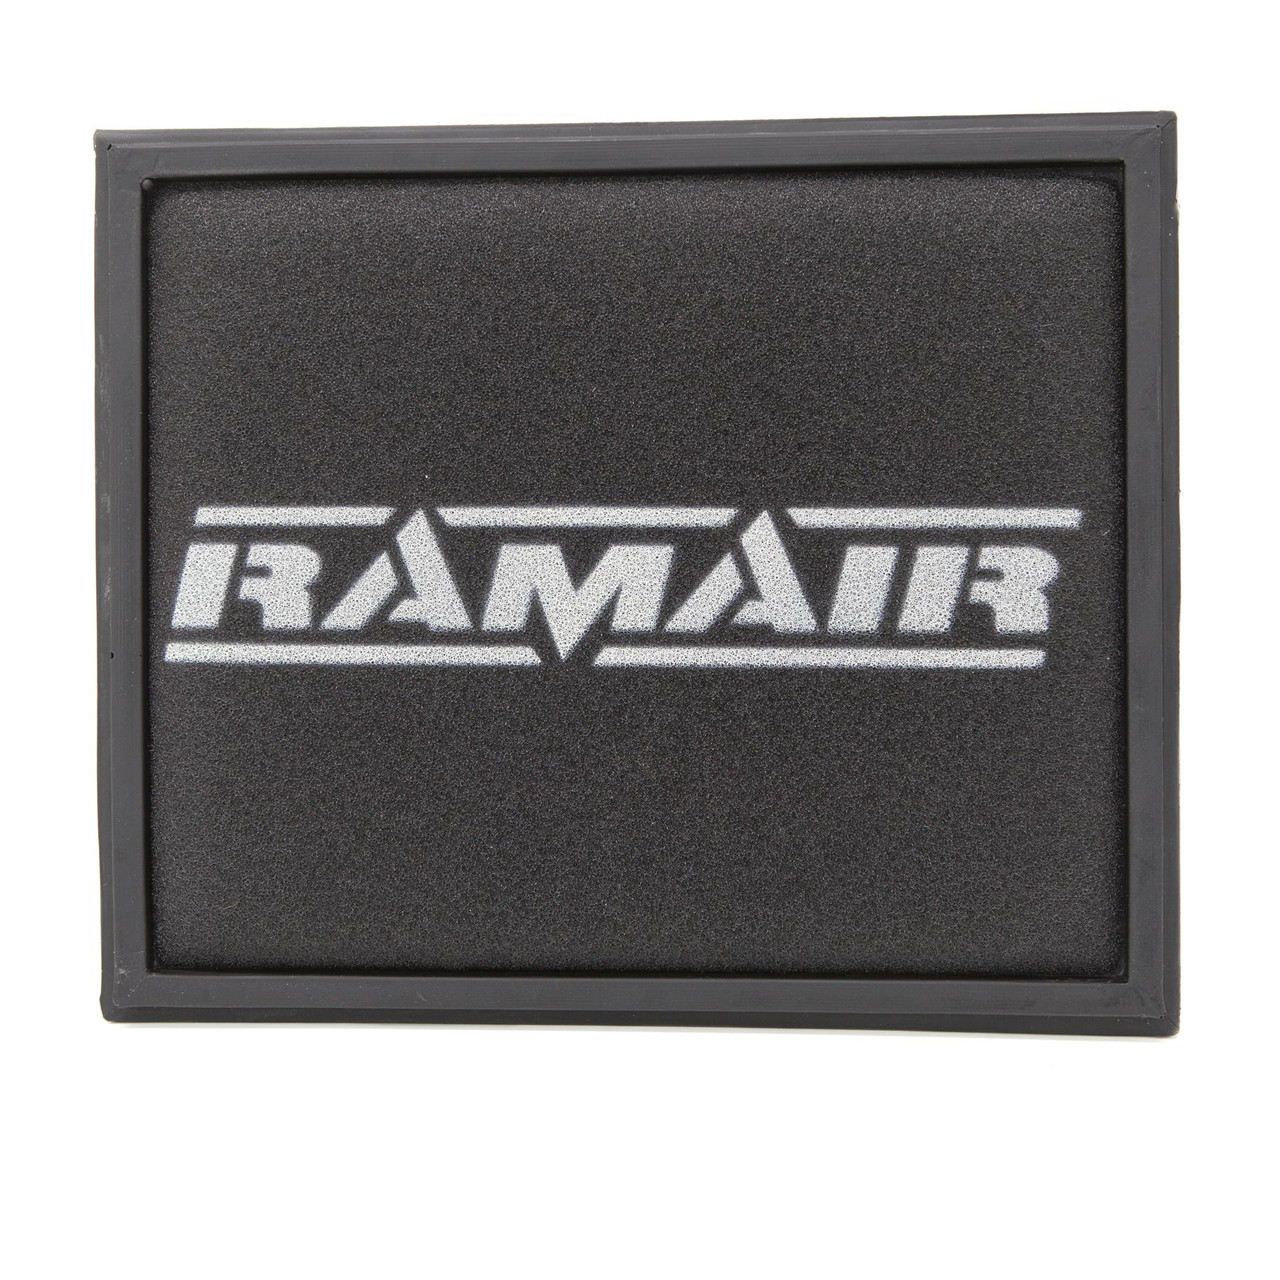 RAMAIR RPF-1566 - VW Audi BMW Replacement Foam Air Filter